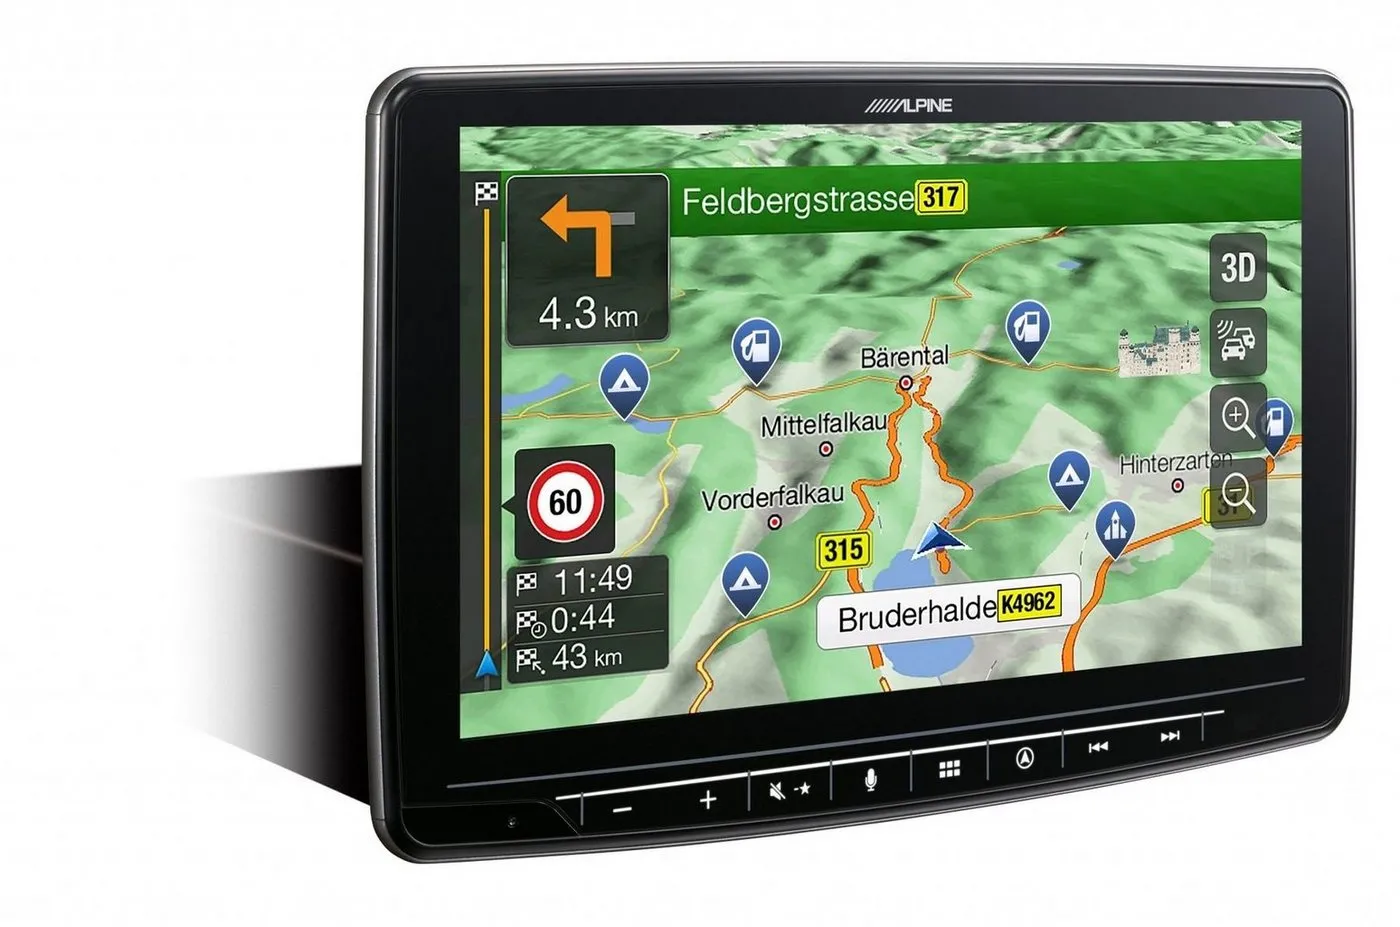 ALPINE »Alpine INE-F904D - 1-DIN Navigationssystem mit 9-Zoll Touchscreen, DAB+, HDMI und Apple CarPlay /Android Auto« Stereoanlage